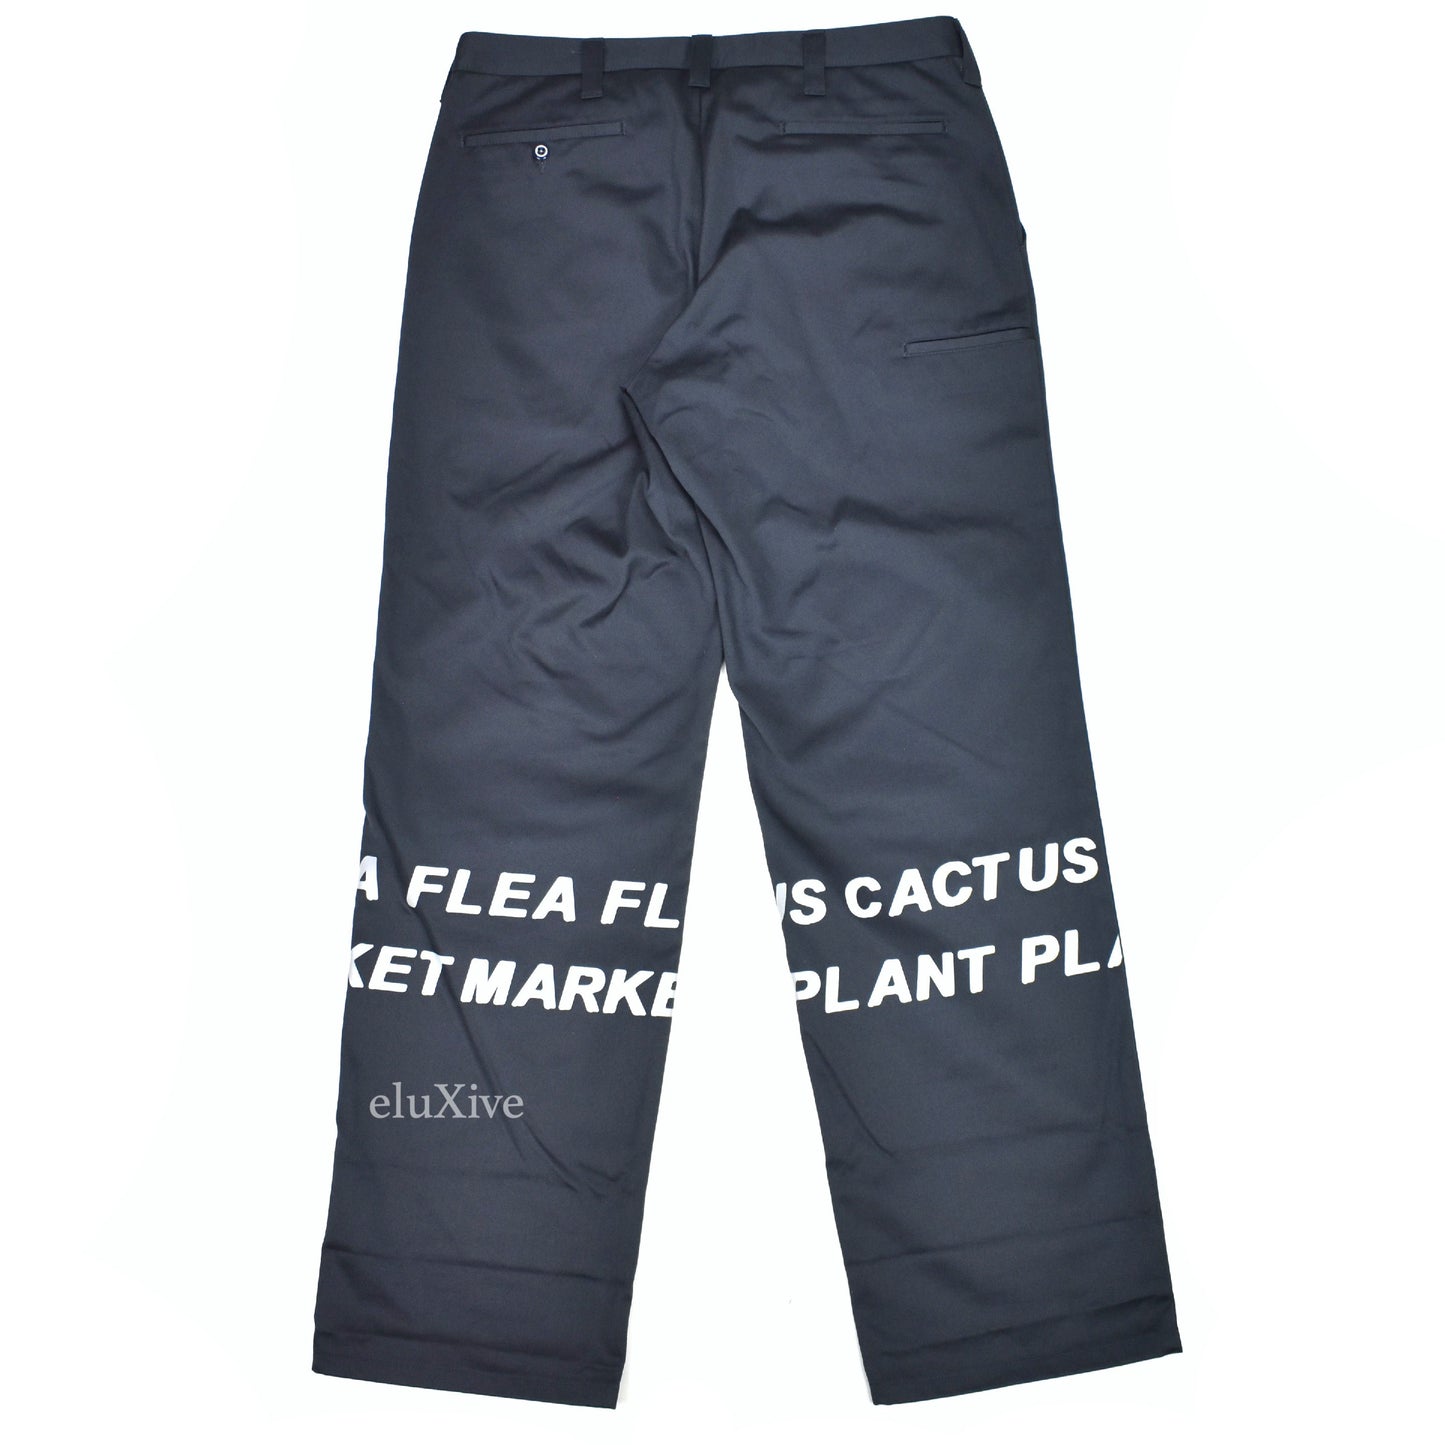 Cactus Plant Flea Market - Navy Hi-Vis Logo Safety Pants